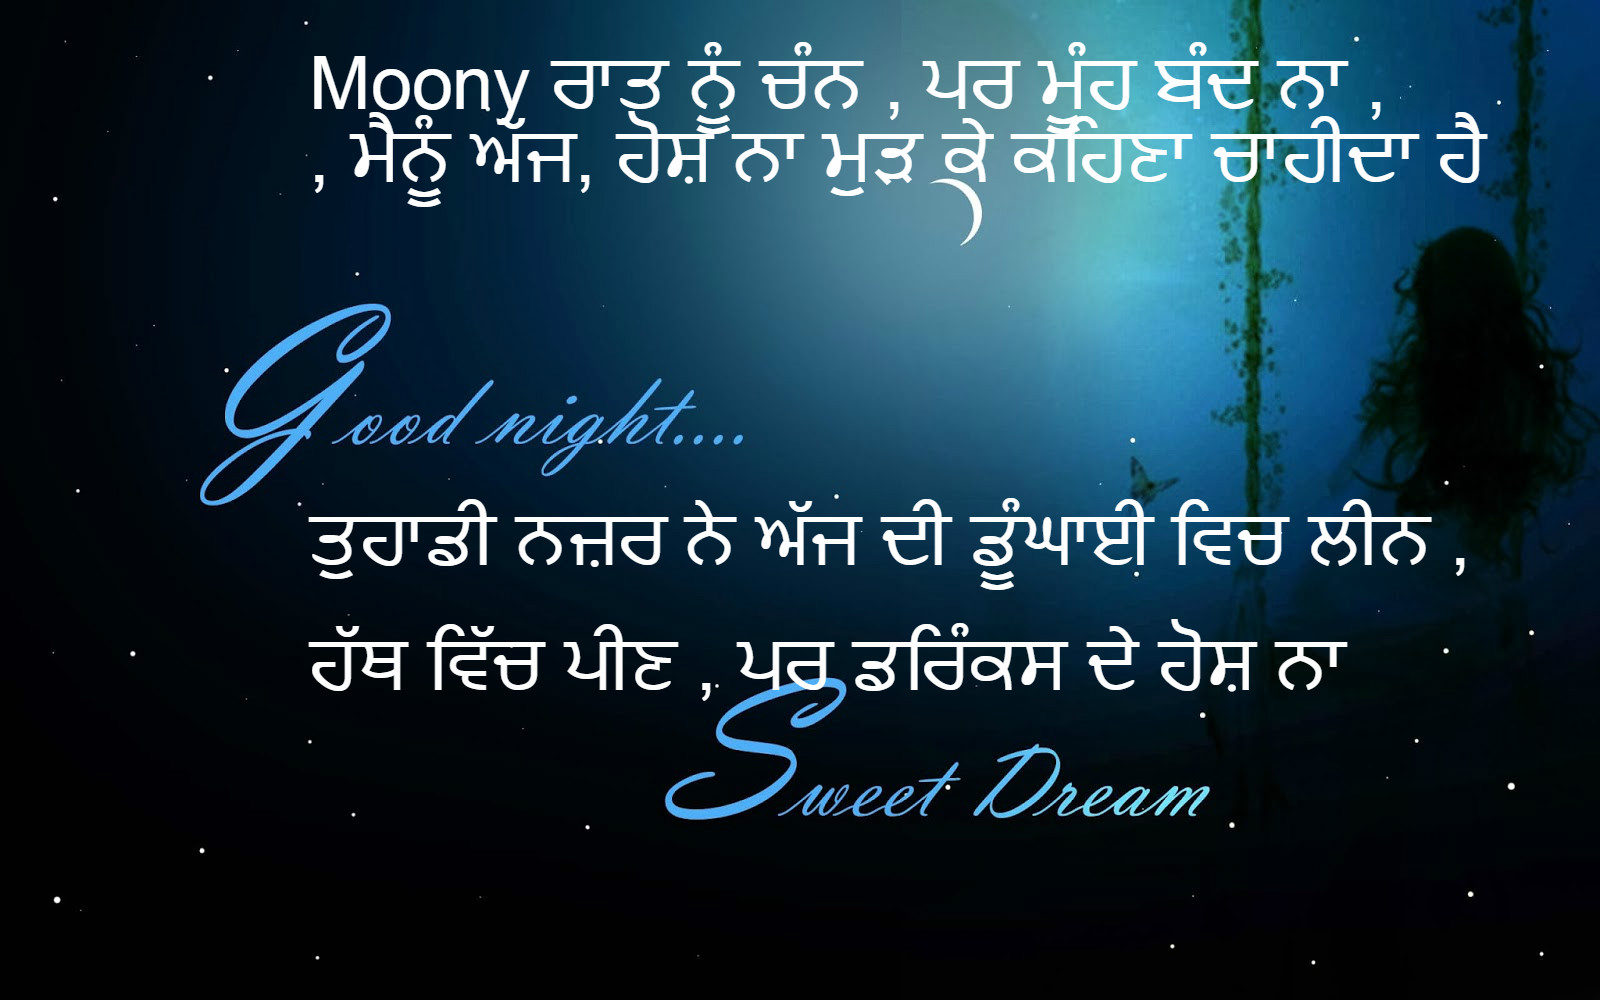 Punjabi Good Night Messages: Goodnight Wishes, Quotes, Shayari Images